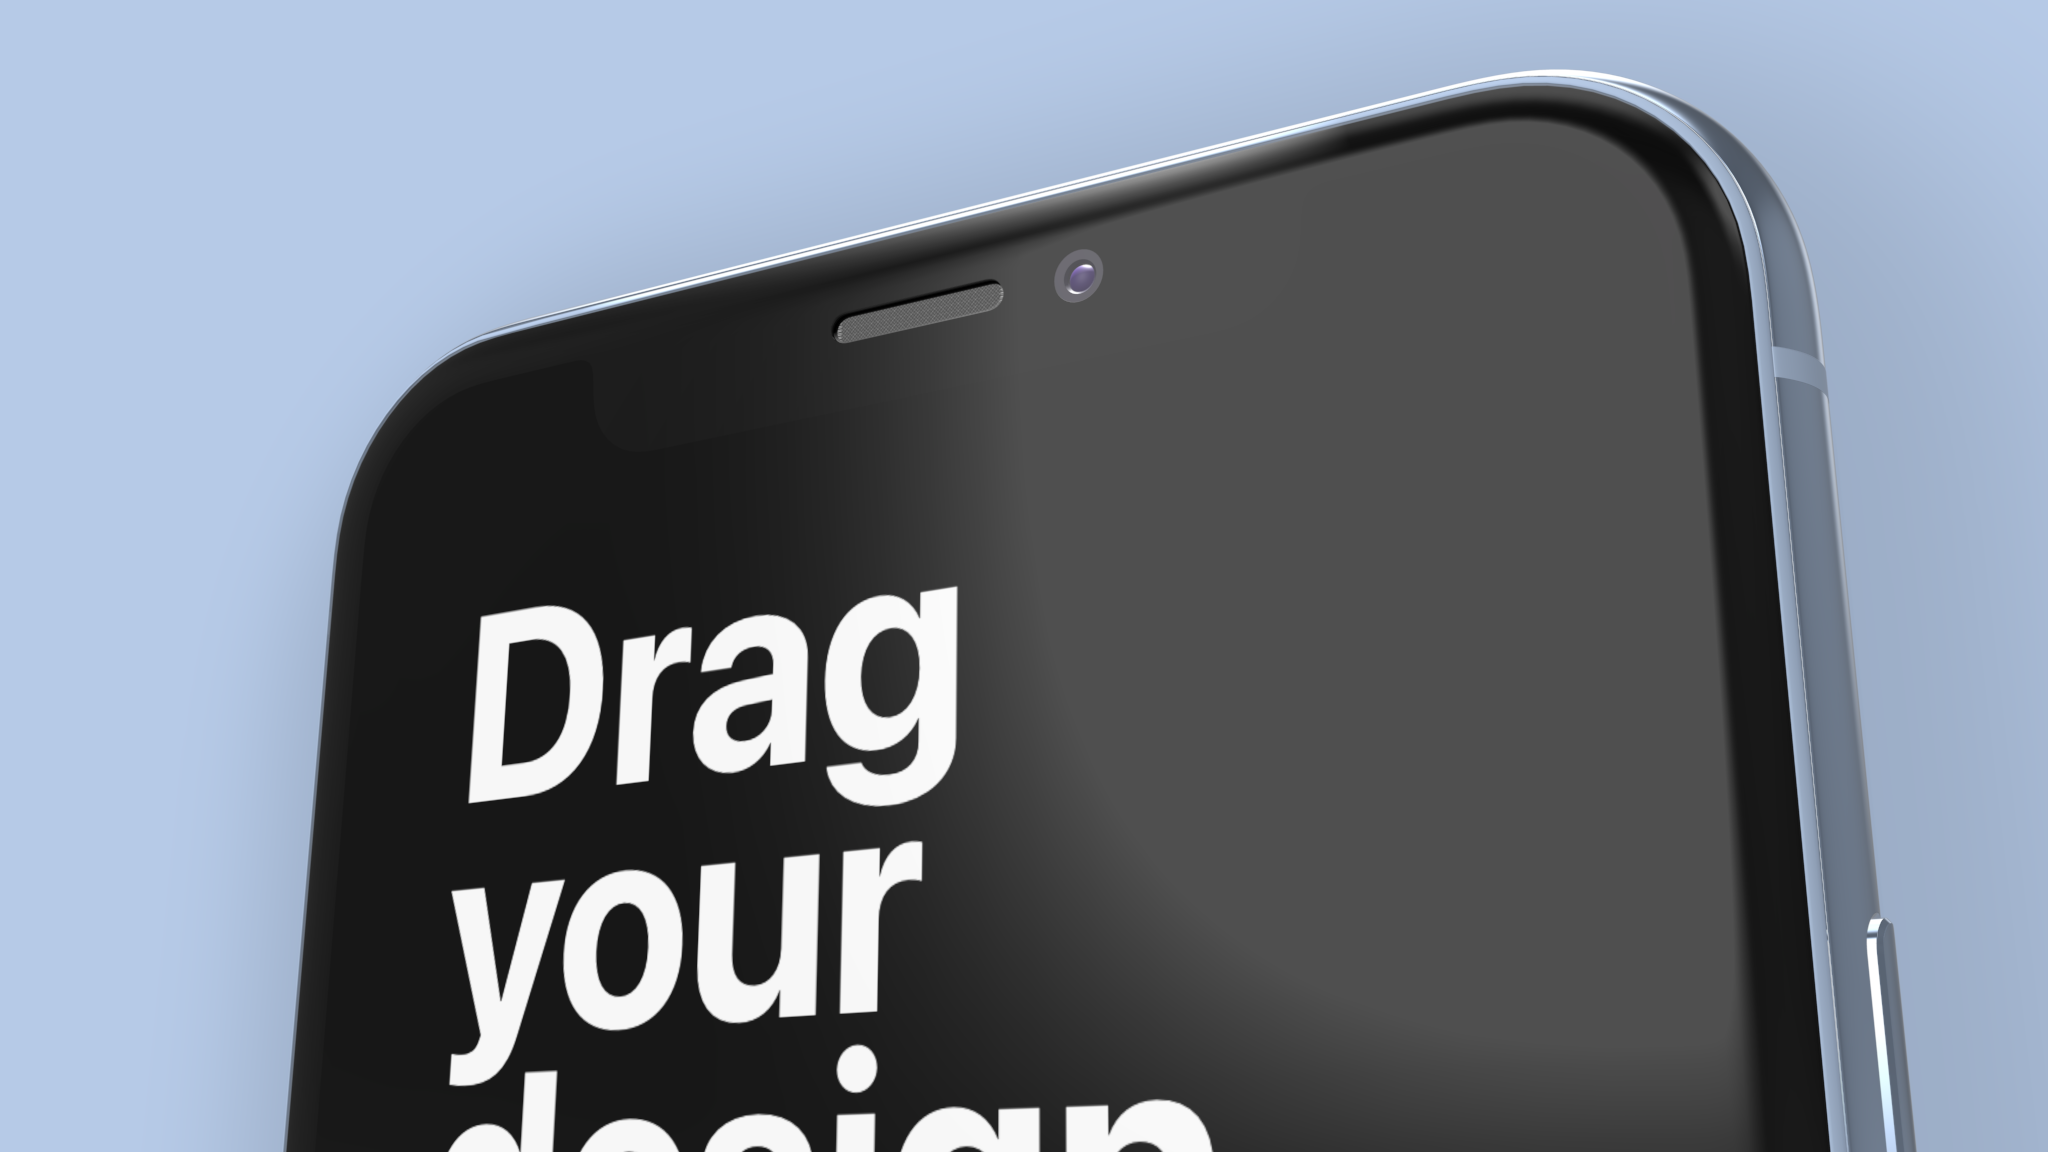 Mockup showing top part of UI design on phone display